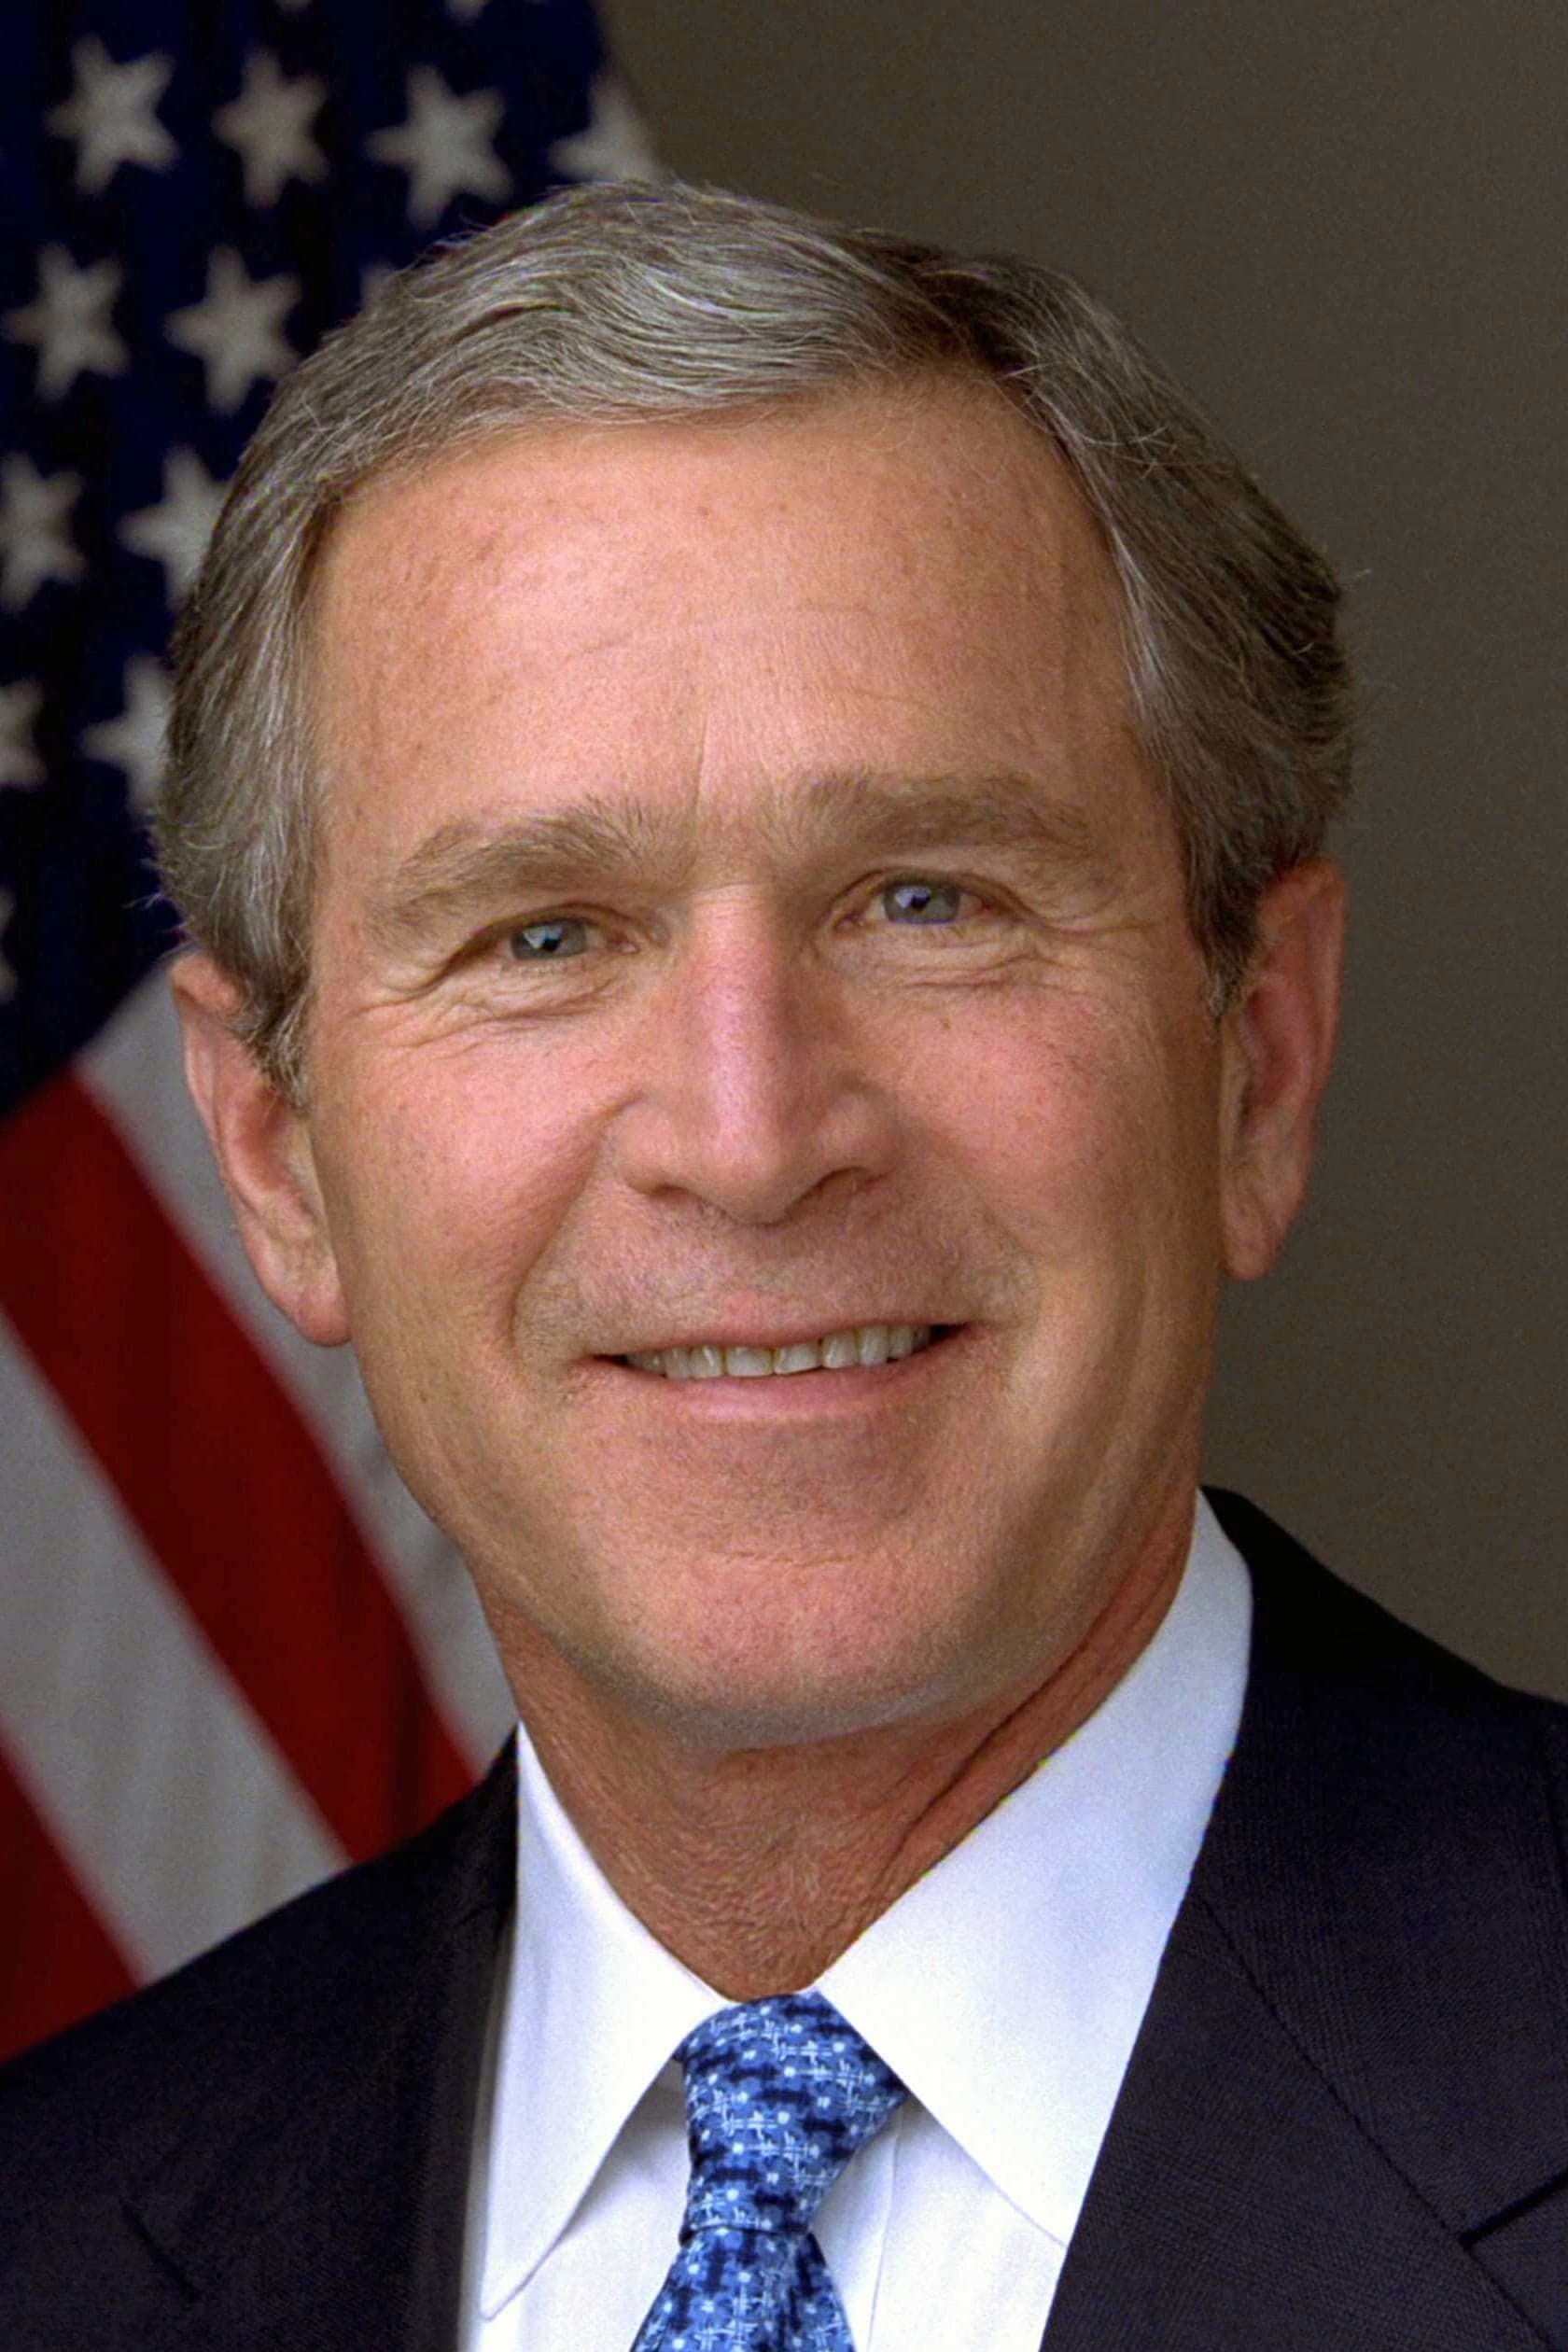 George W. Bush | Himself